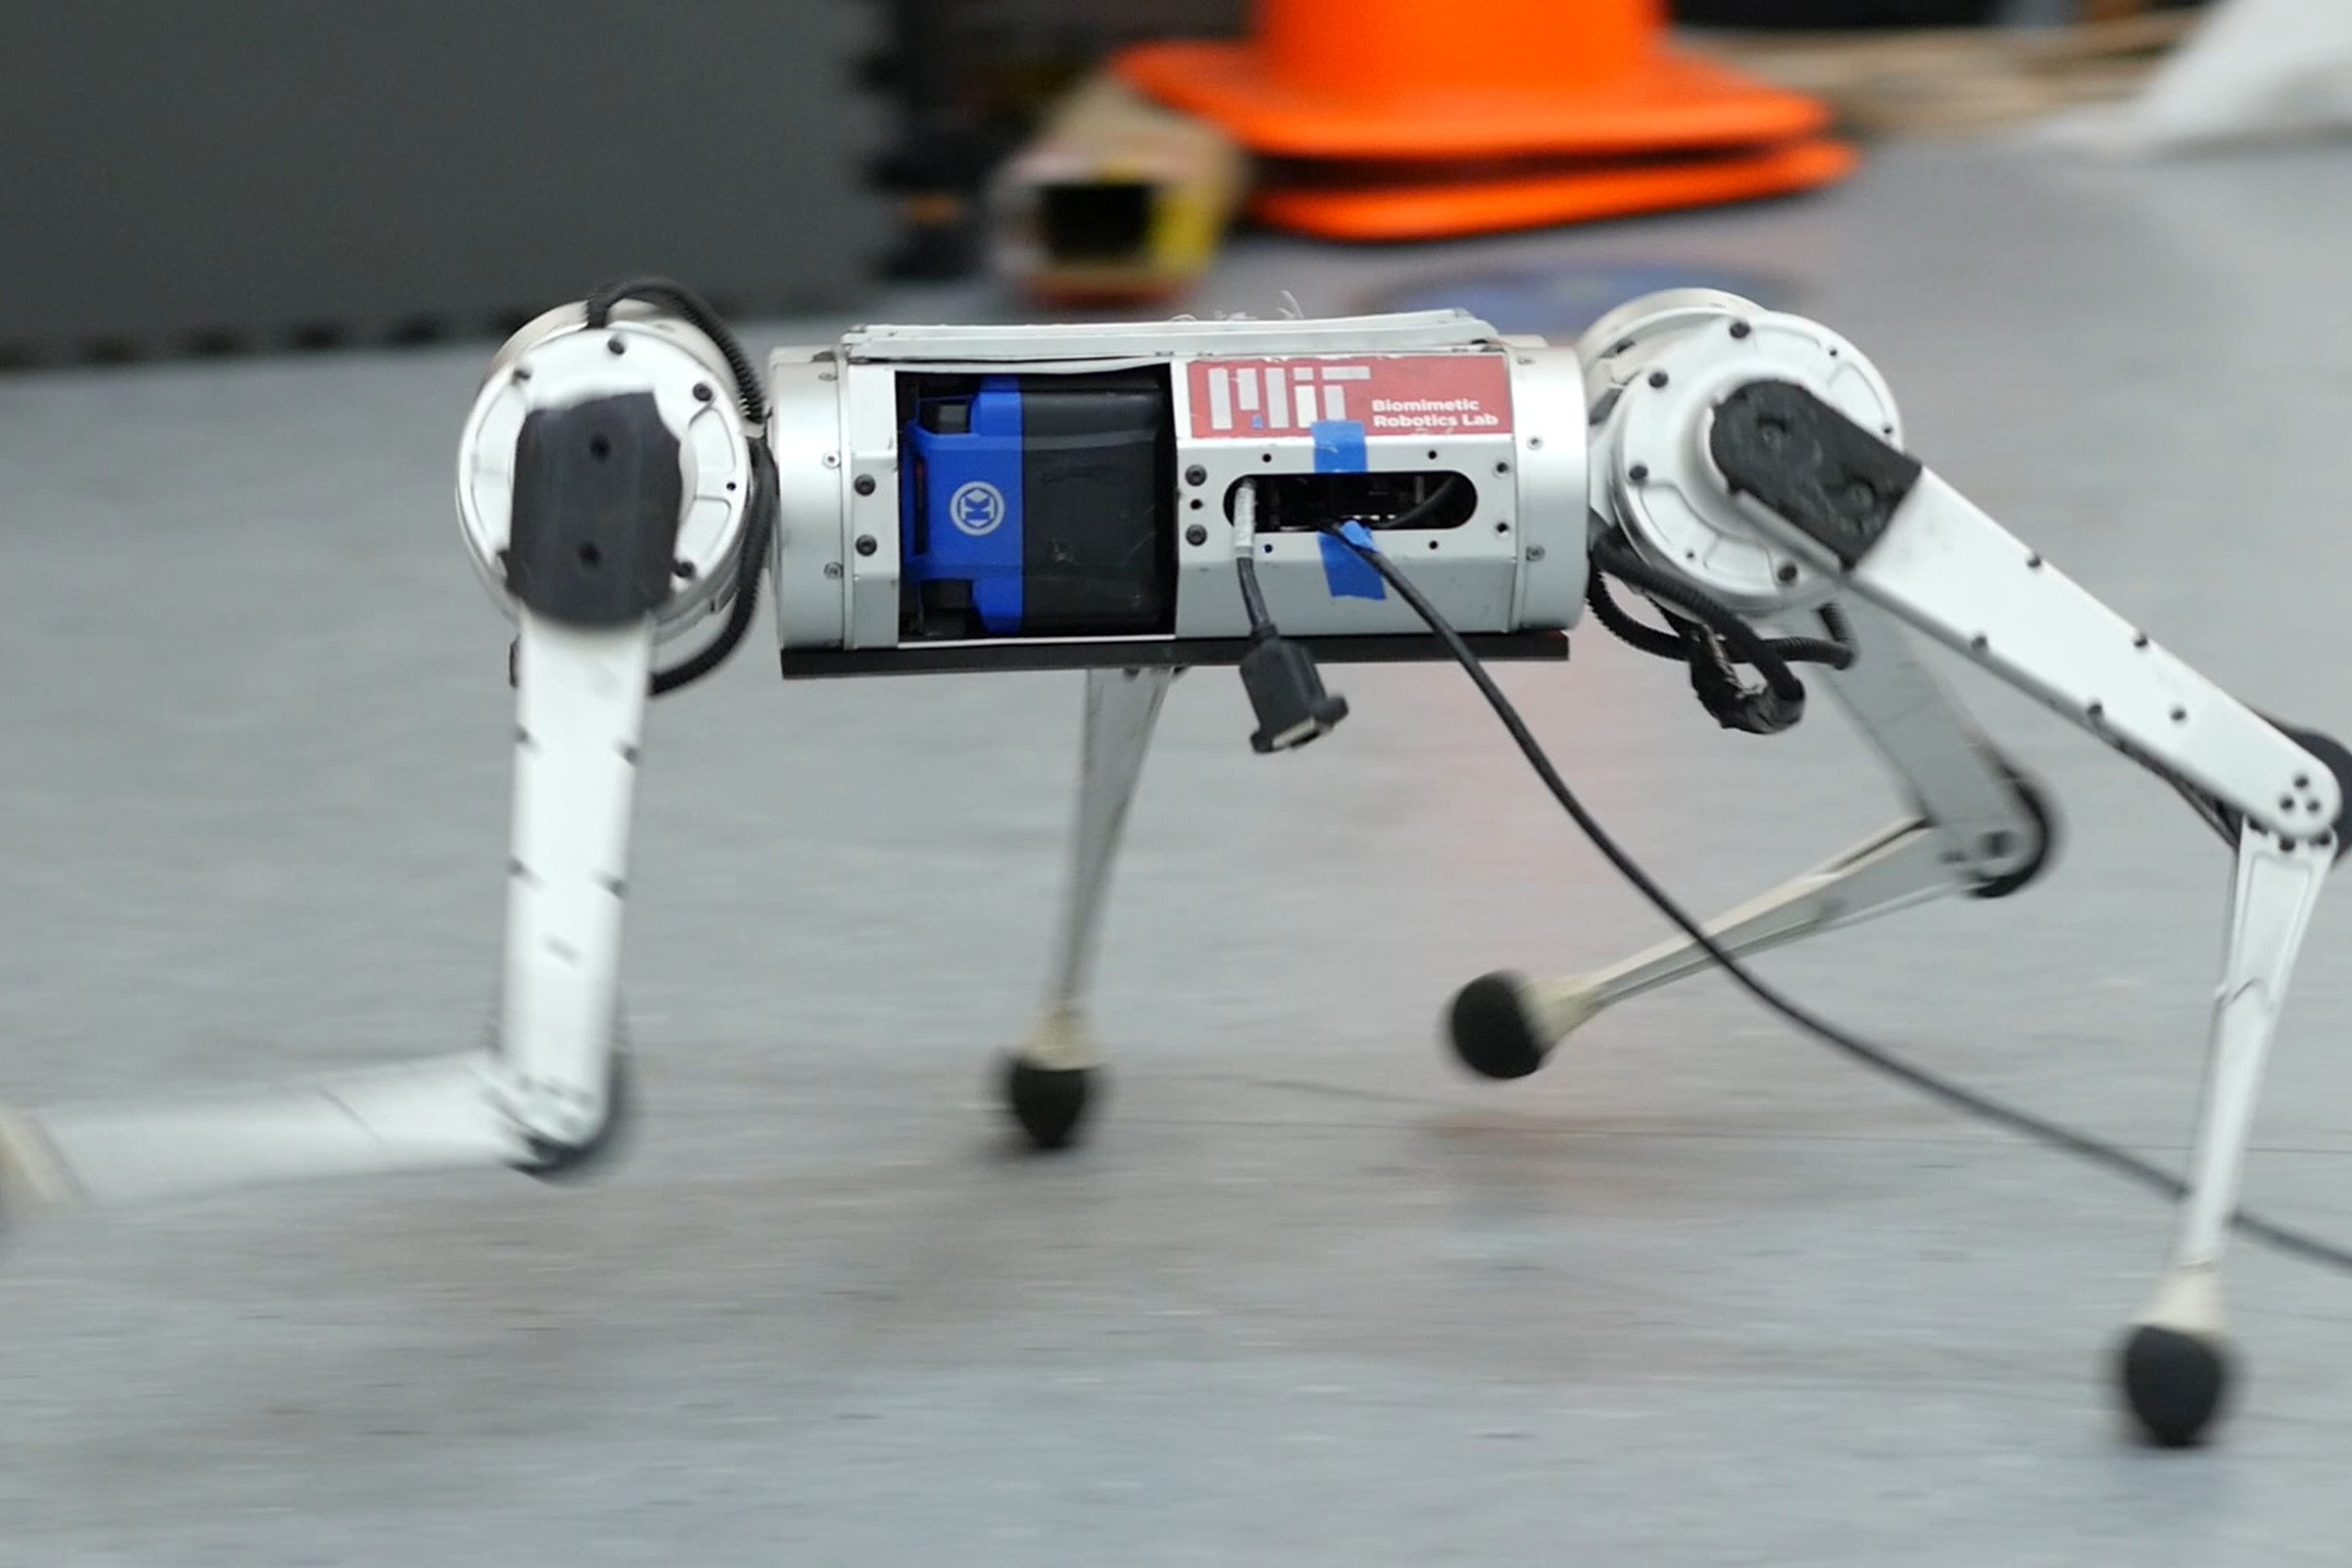 MIT’s Mini Cheetah robot takes off running. 